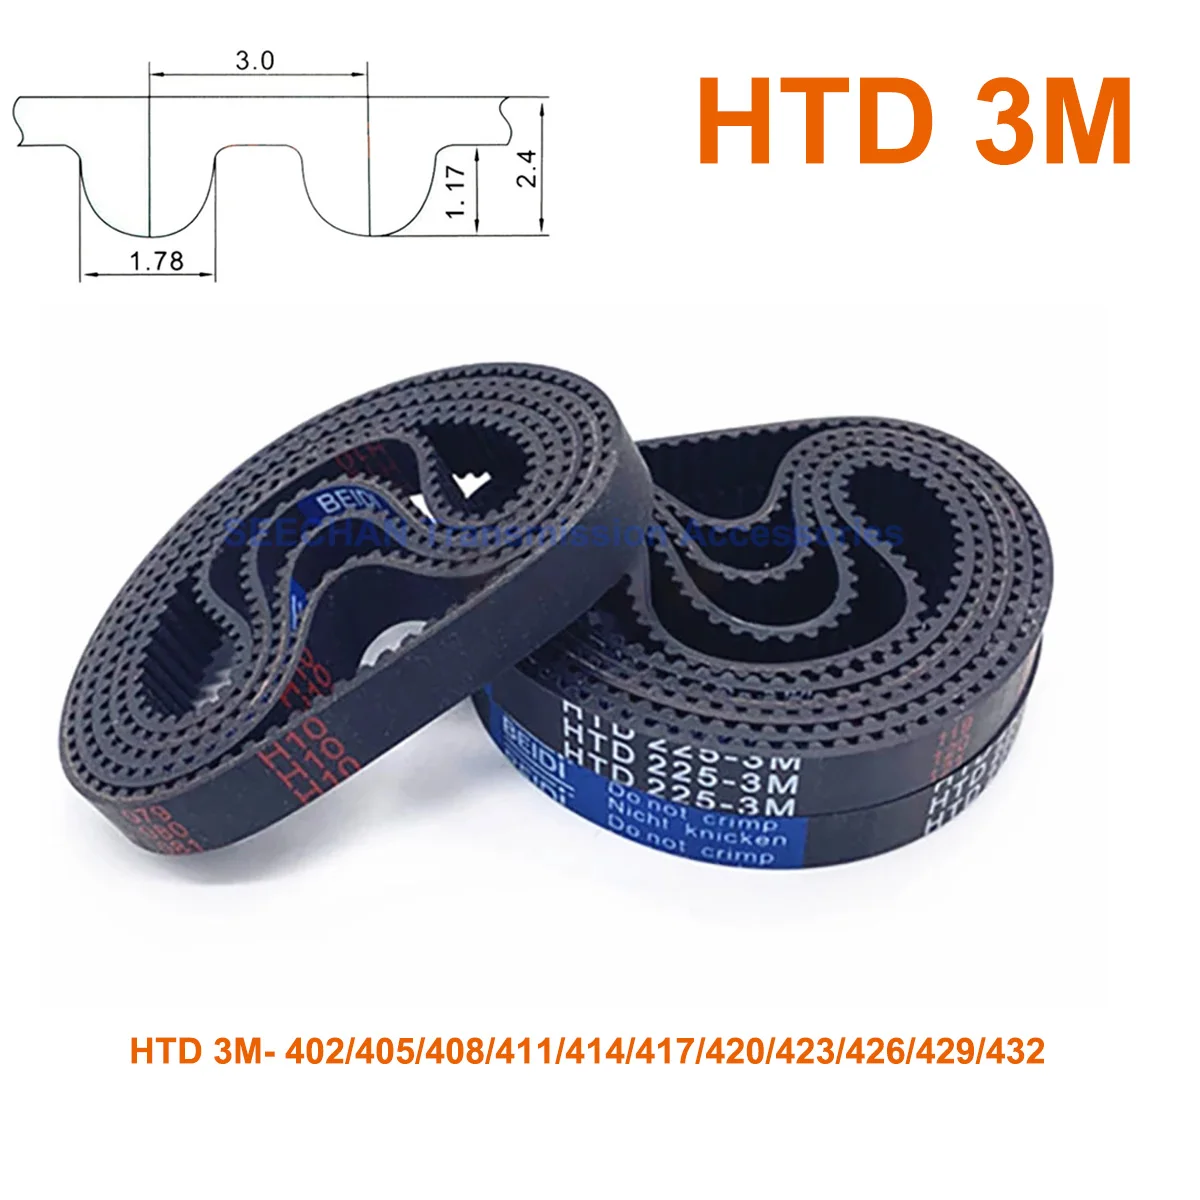 HTD 3M Timing belt Endless 414/417/420mm Length 6/9mm Width 